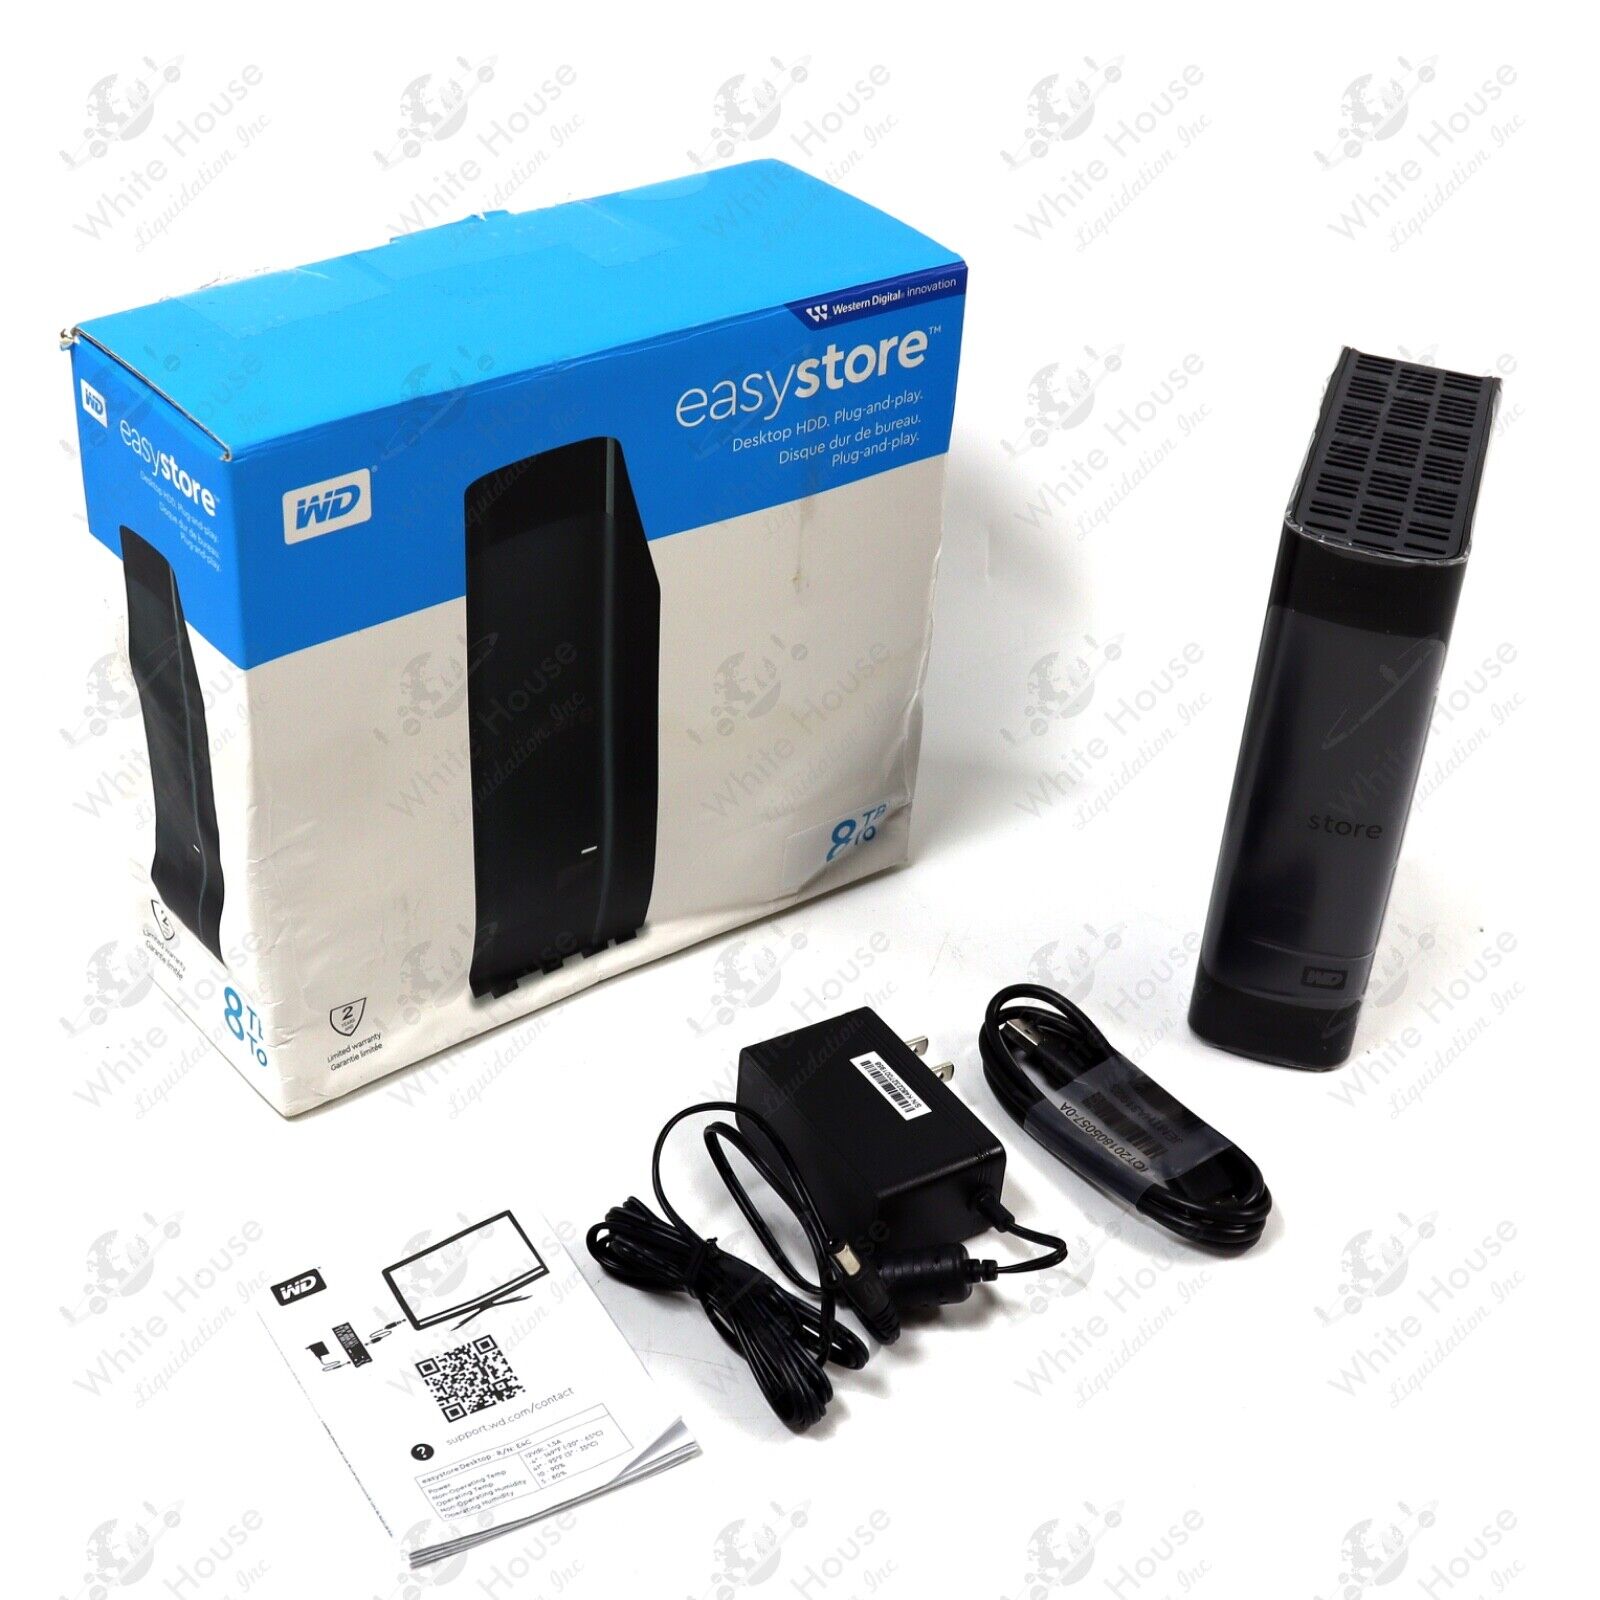 WD - easystore 8TB External USB 3.0 Hard Drive - Black